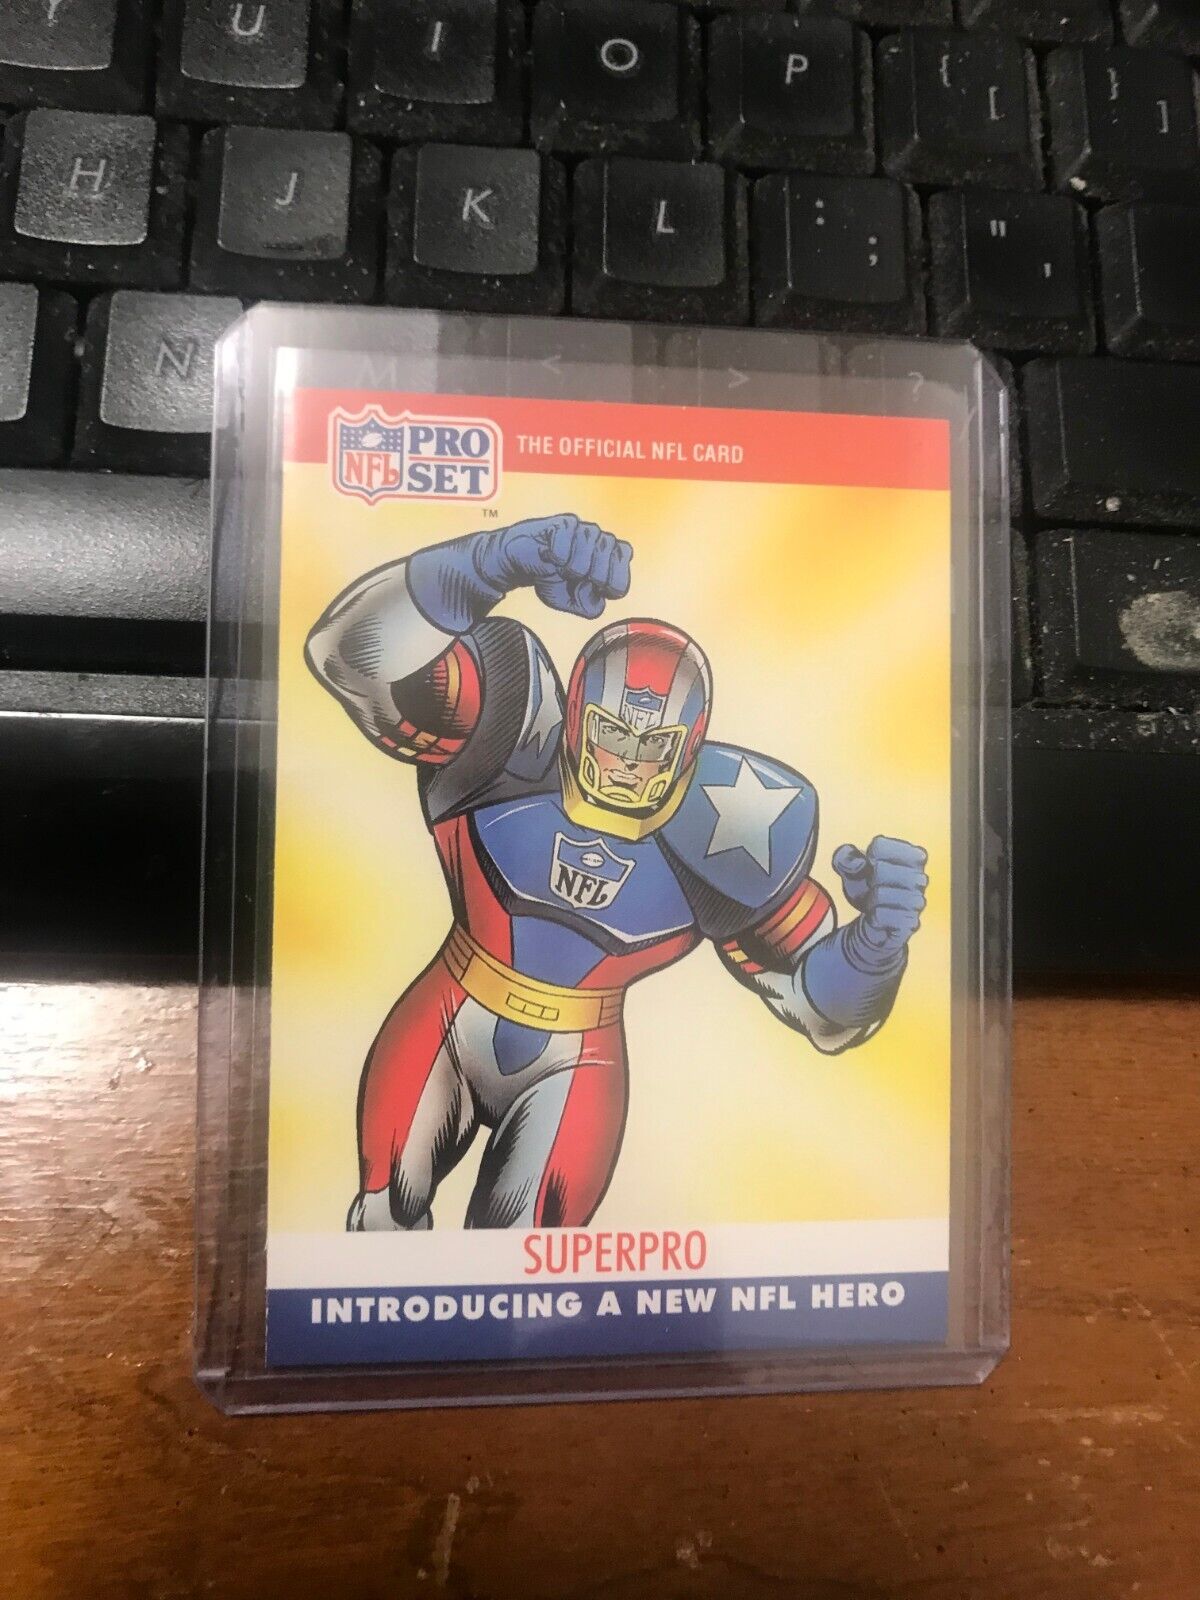 1990 NFL Proset Superpro Pro set Chase Card Introducing A New NFL Hero